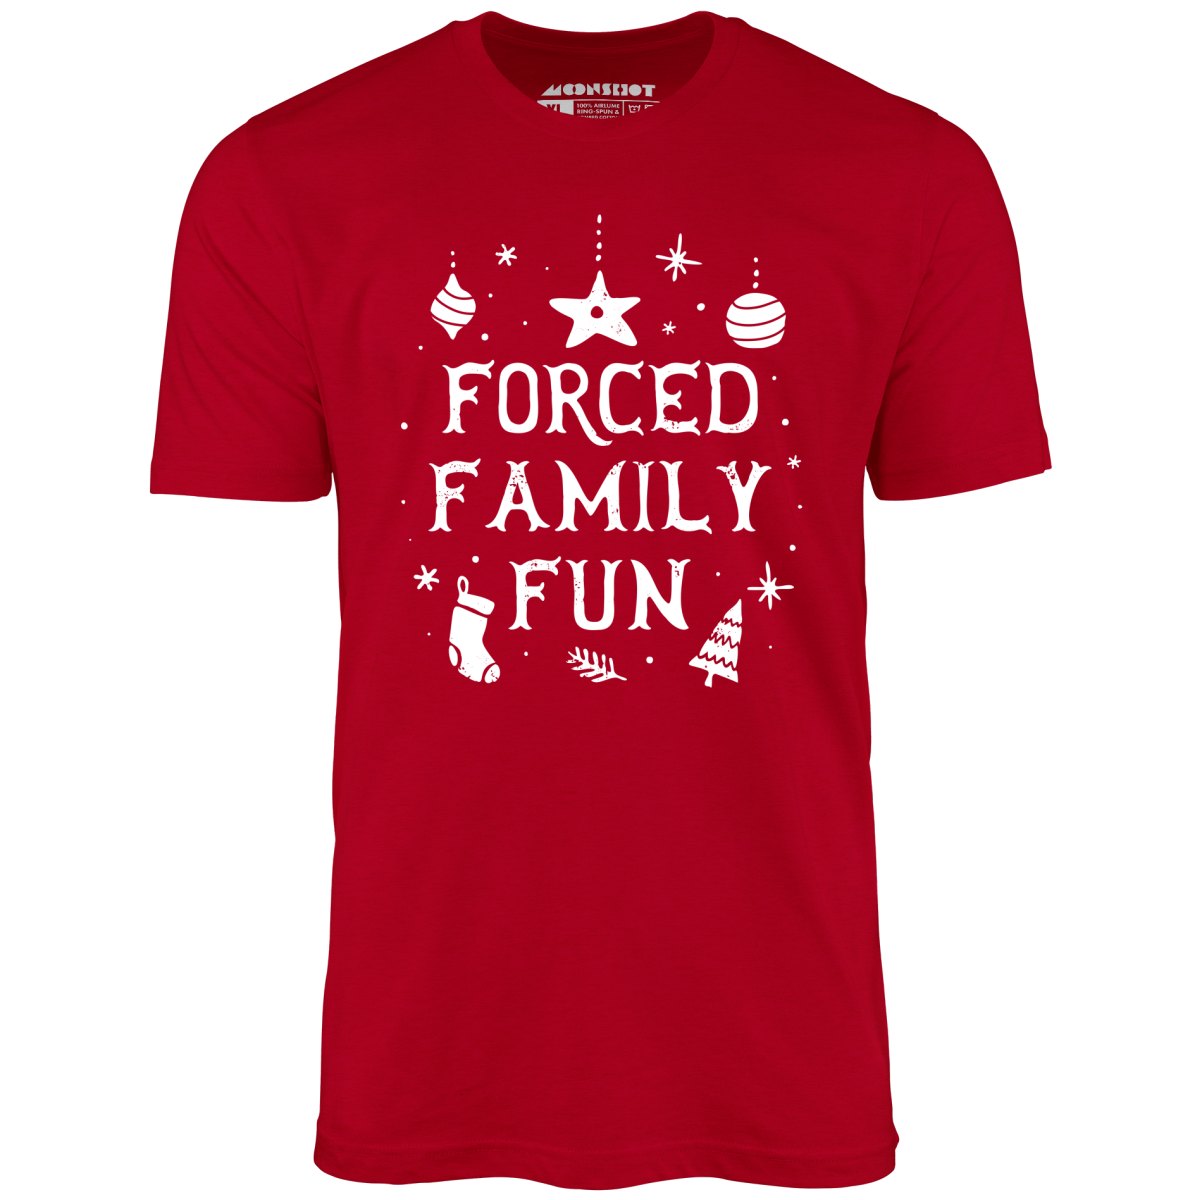 Forced Family Fun - Unisex T-Shirt